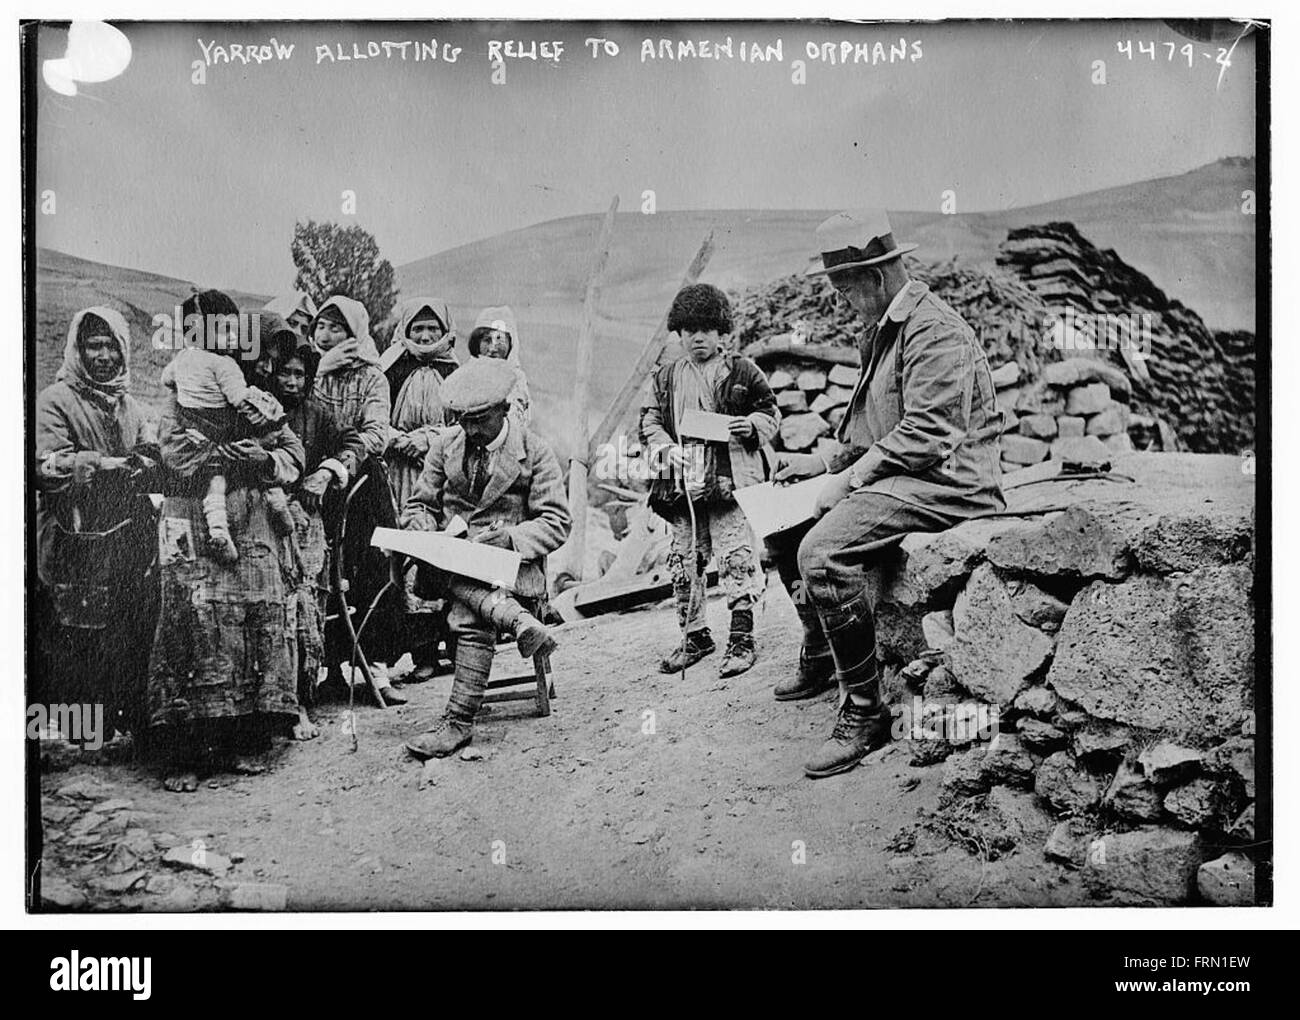 Yarrow allotting relief to Armenian orphans Stock Photo